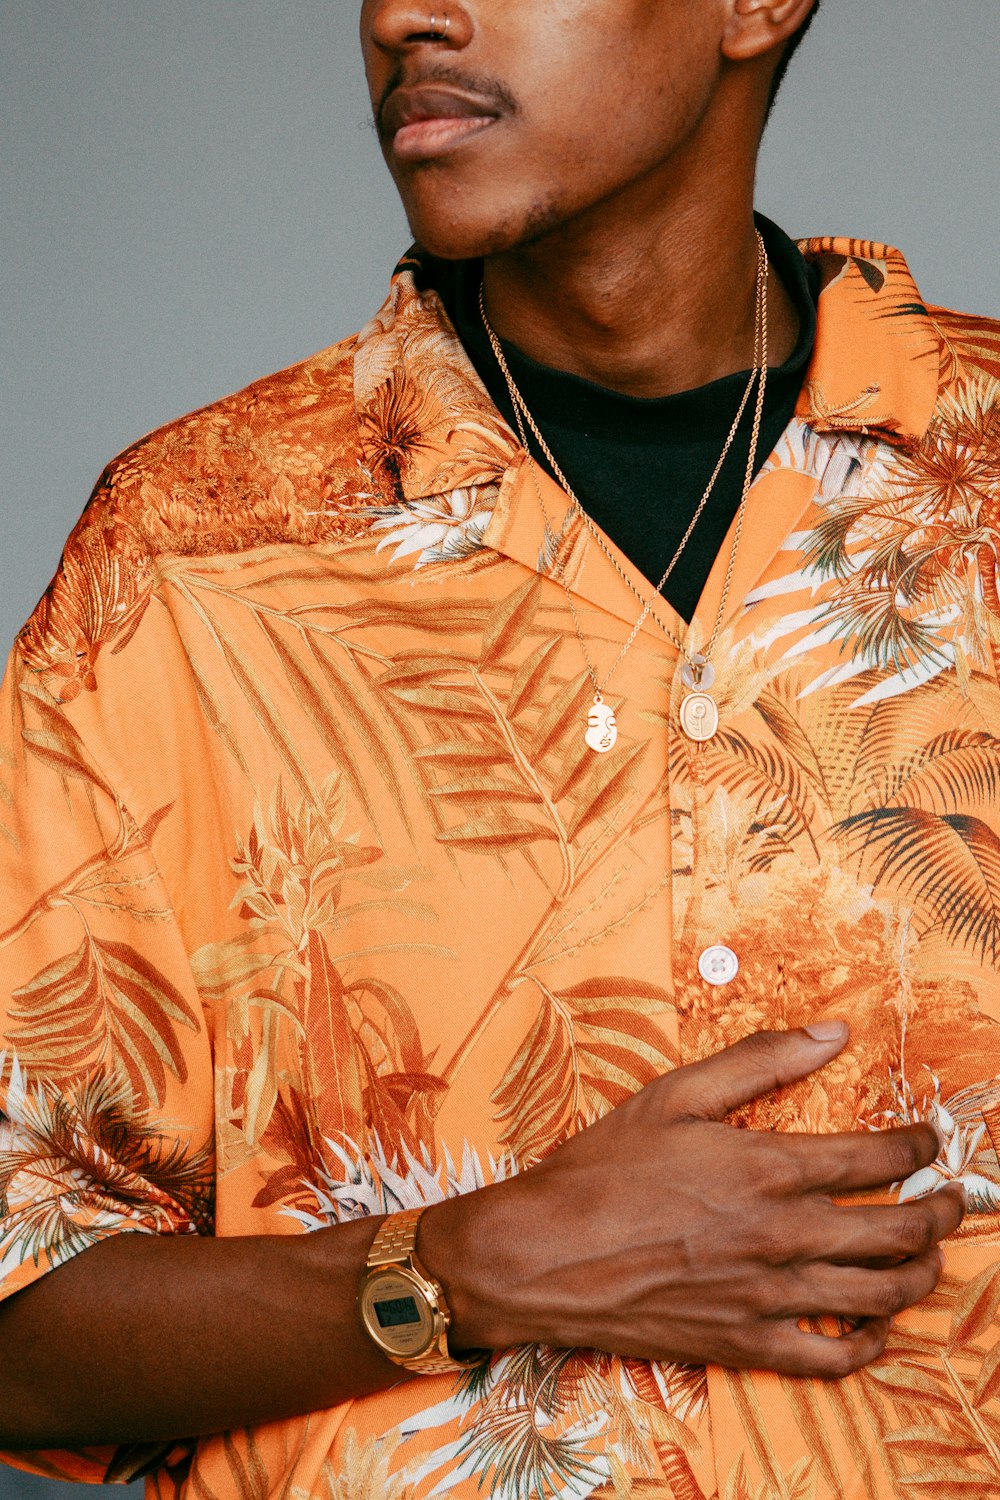 a man wearing an orange hawaiian shirt with palm leaves on it